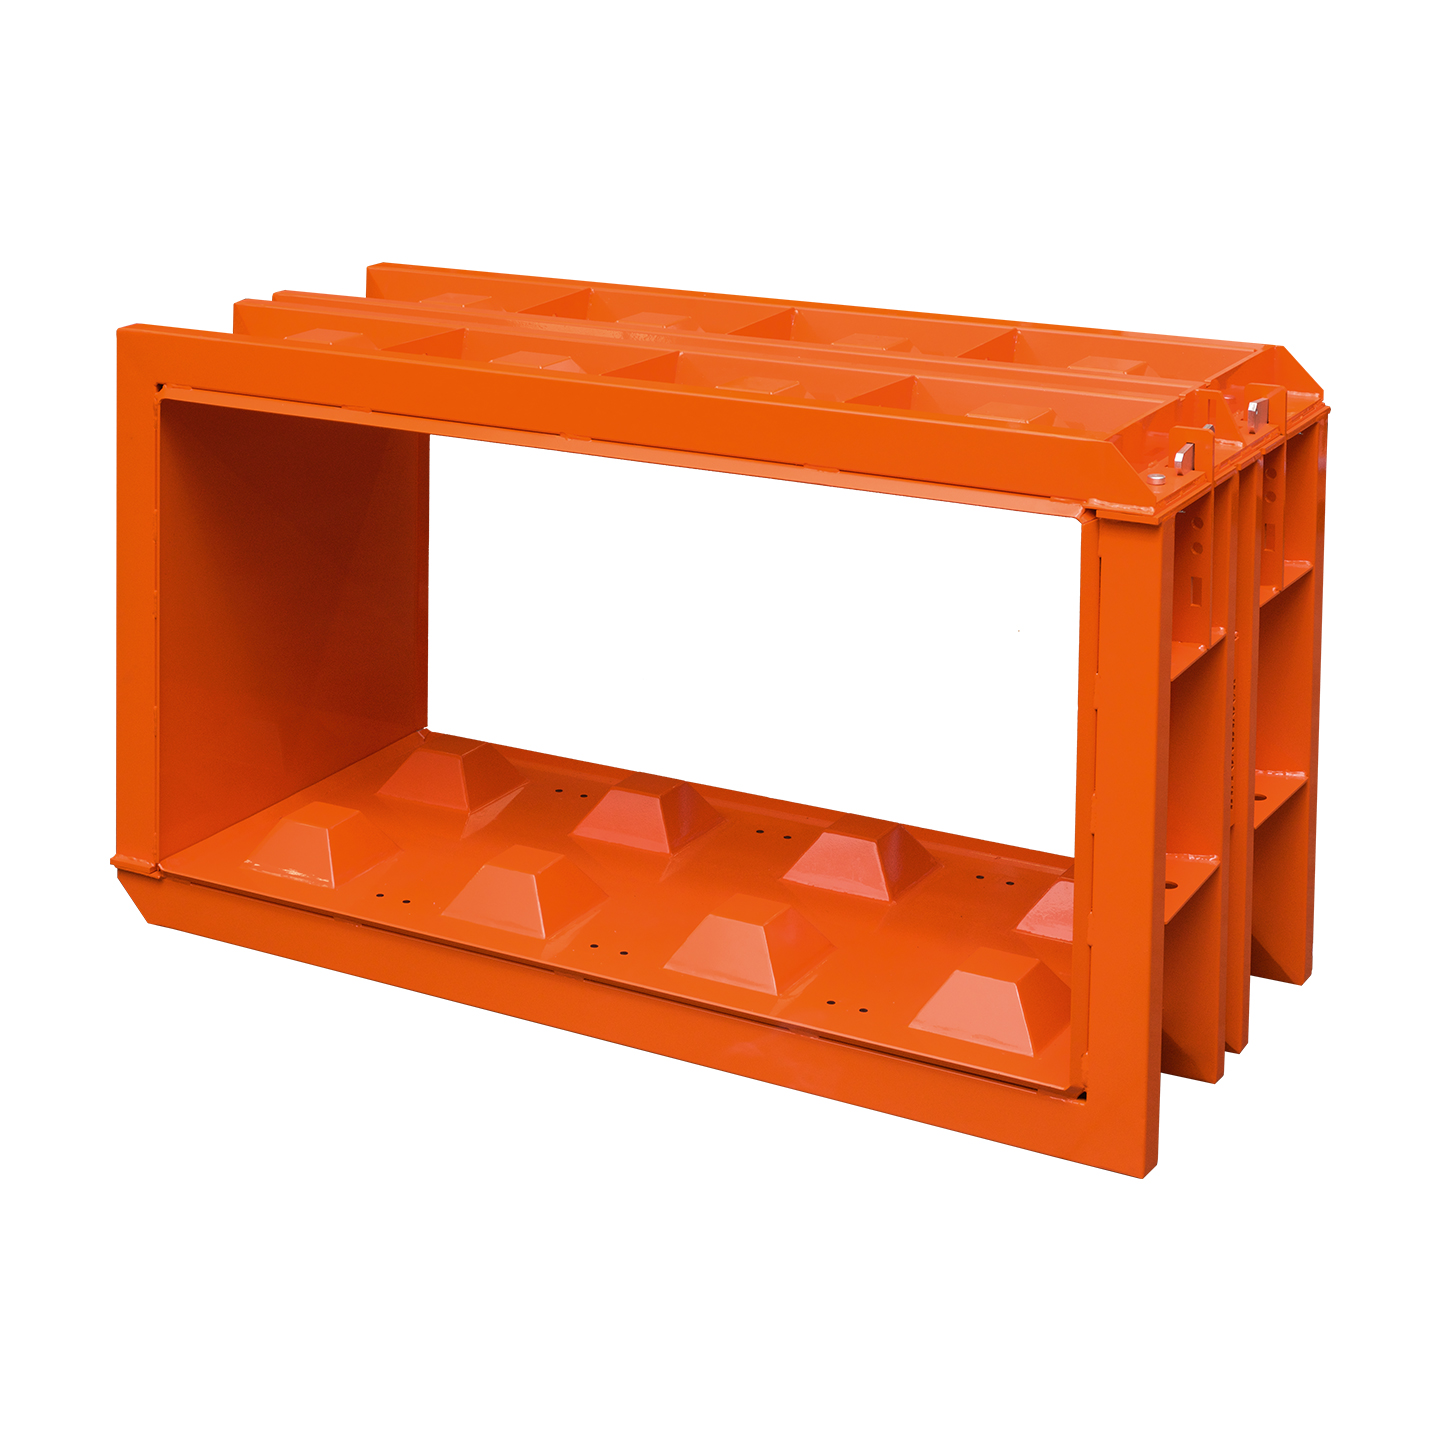 Steel orange concrete block mold, 160x80x80 cm